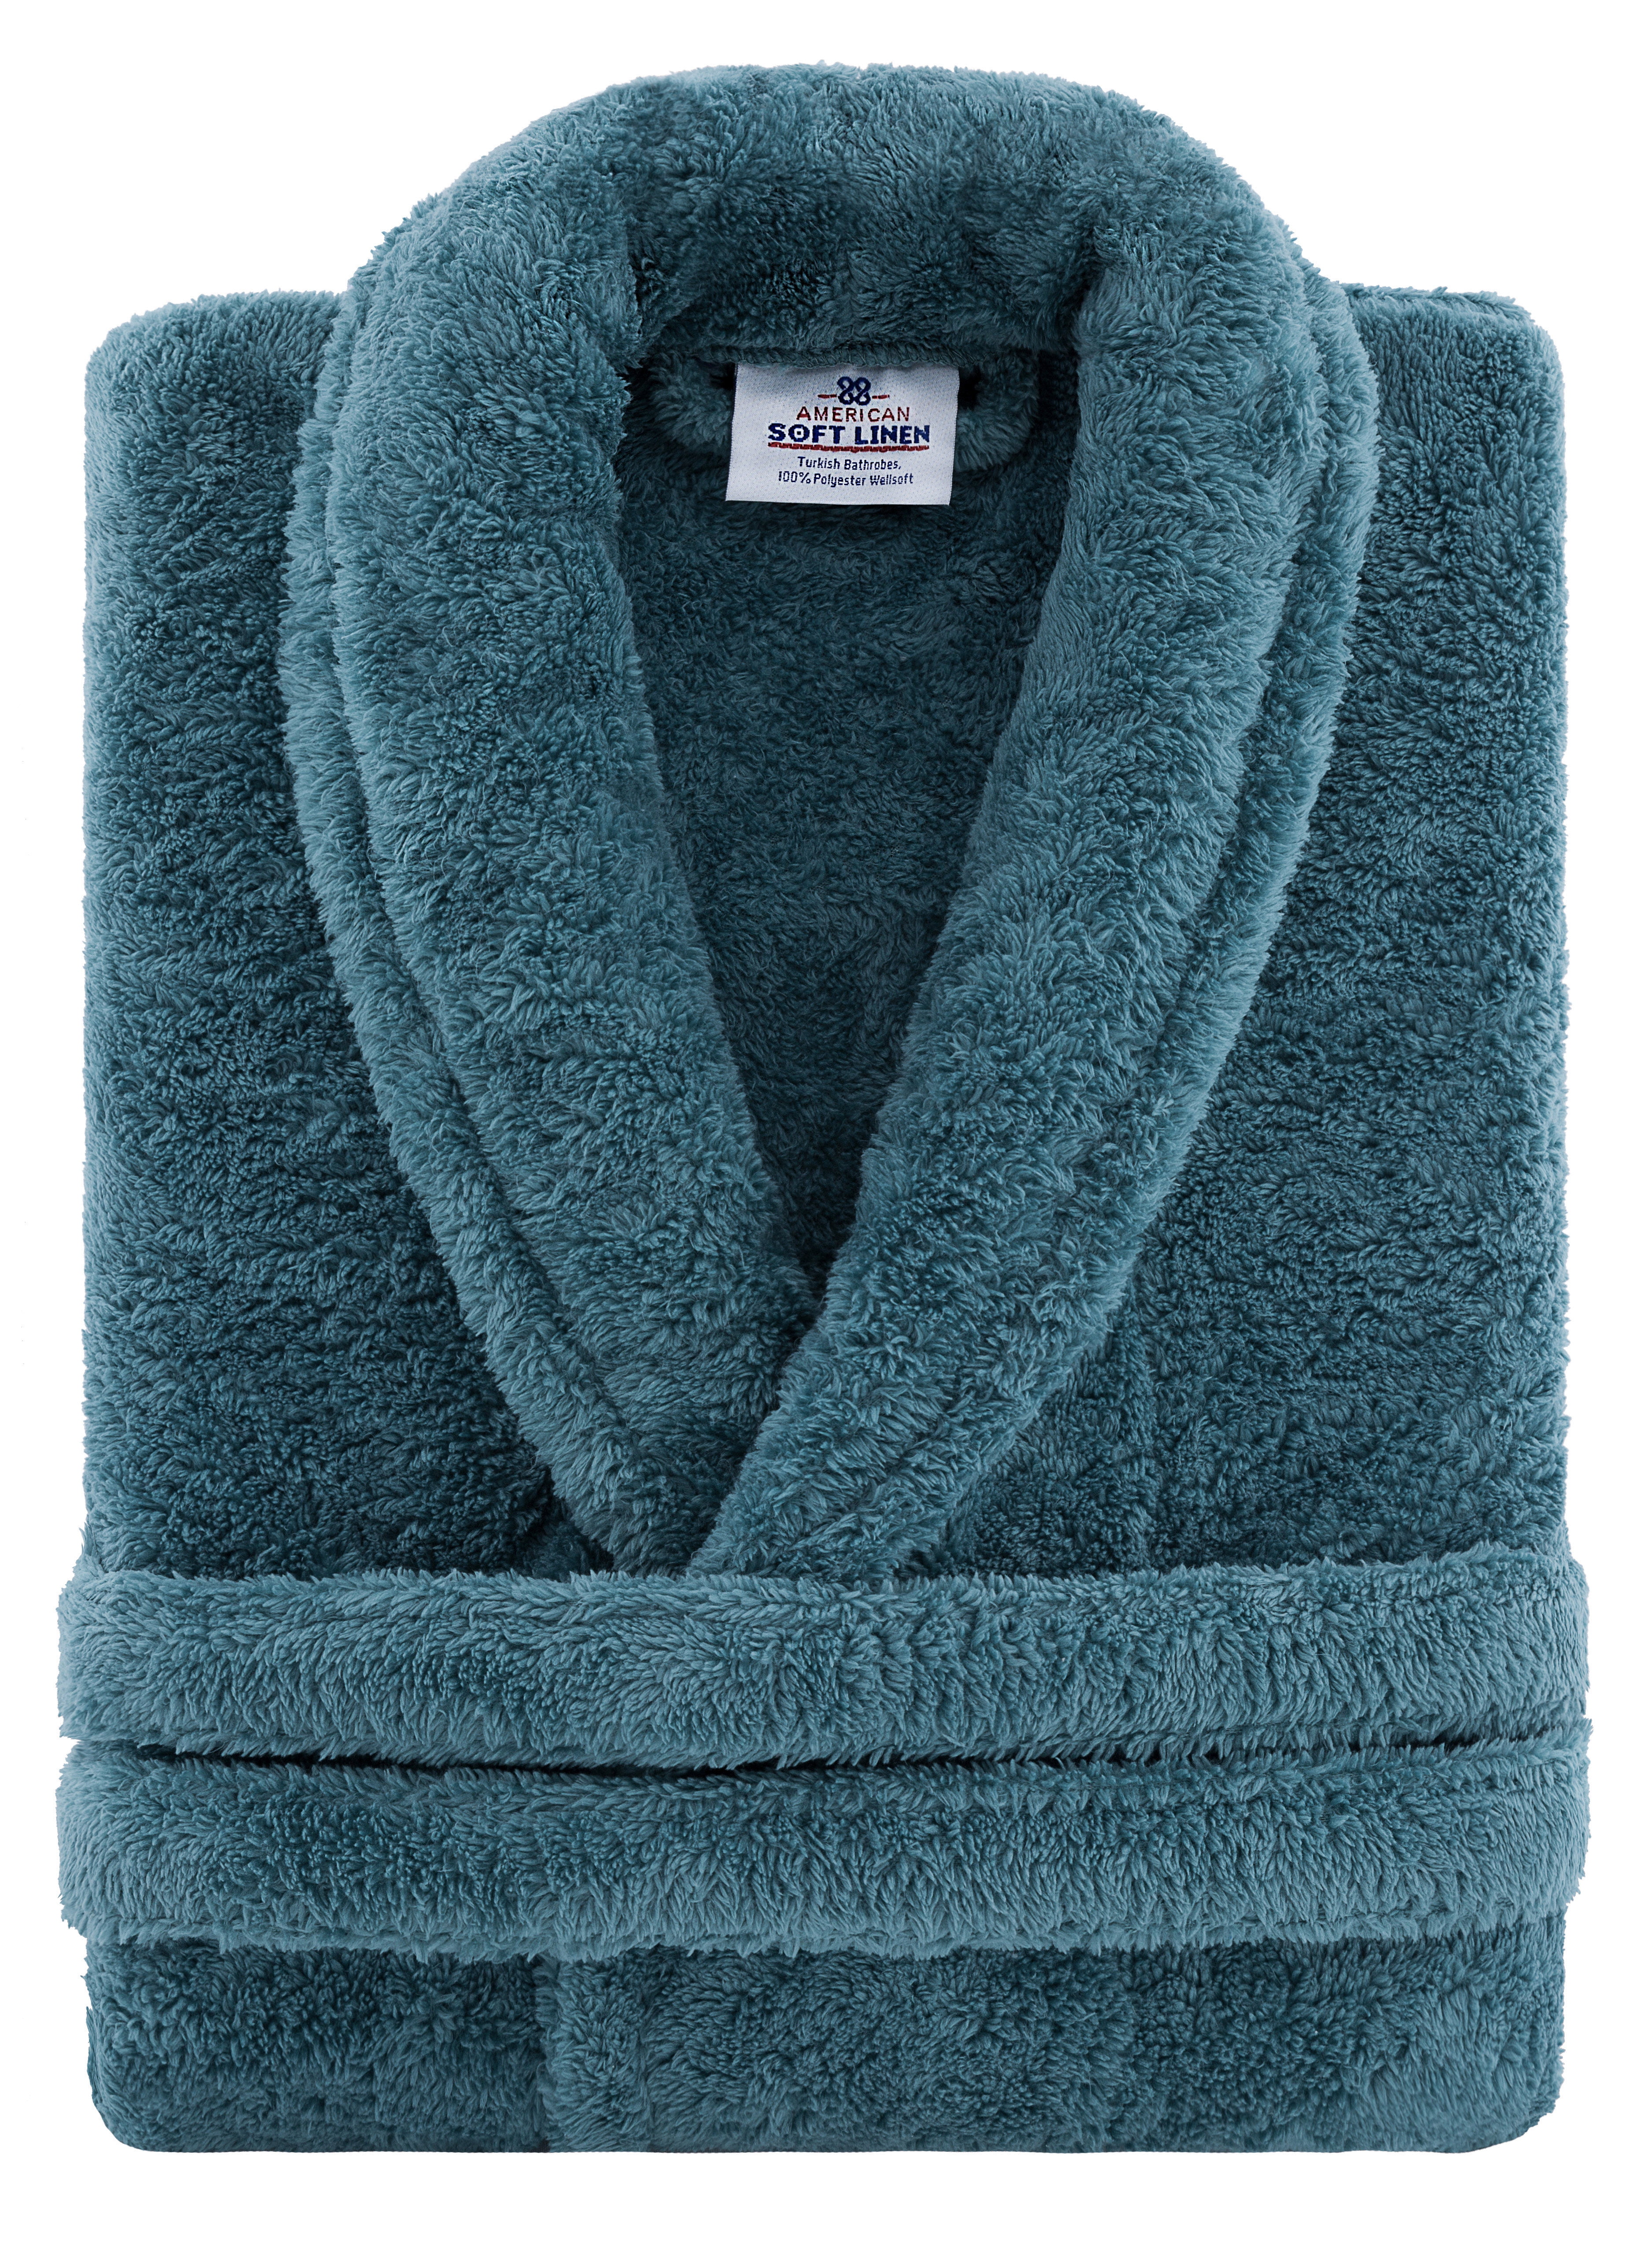  American Soft Linen X Large/XX Large Unisex Robe and 6-Piece  Towel Set Bundle : Home & Kitchen